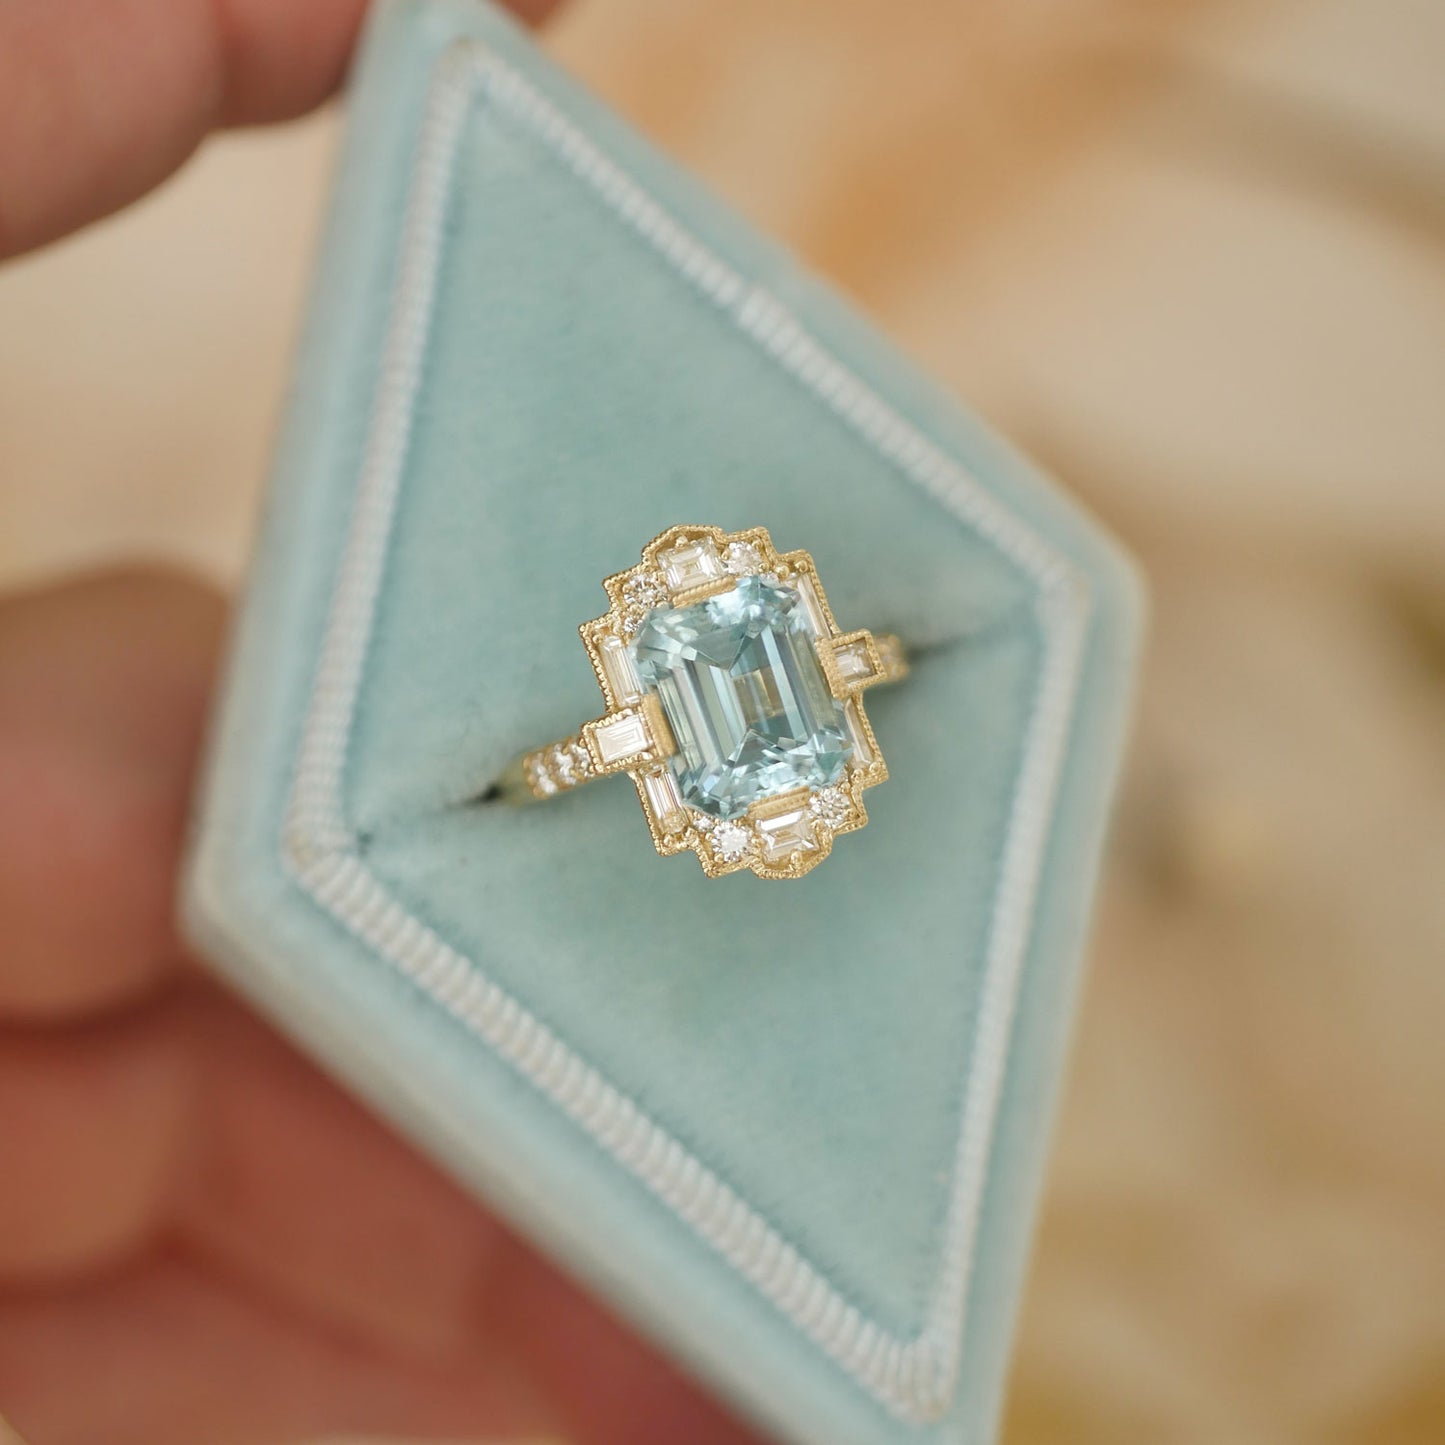 Deco Emerald Cut Aquamarine Diamond Mosaic Ring